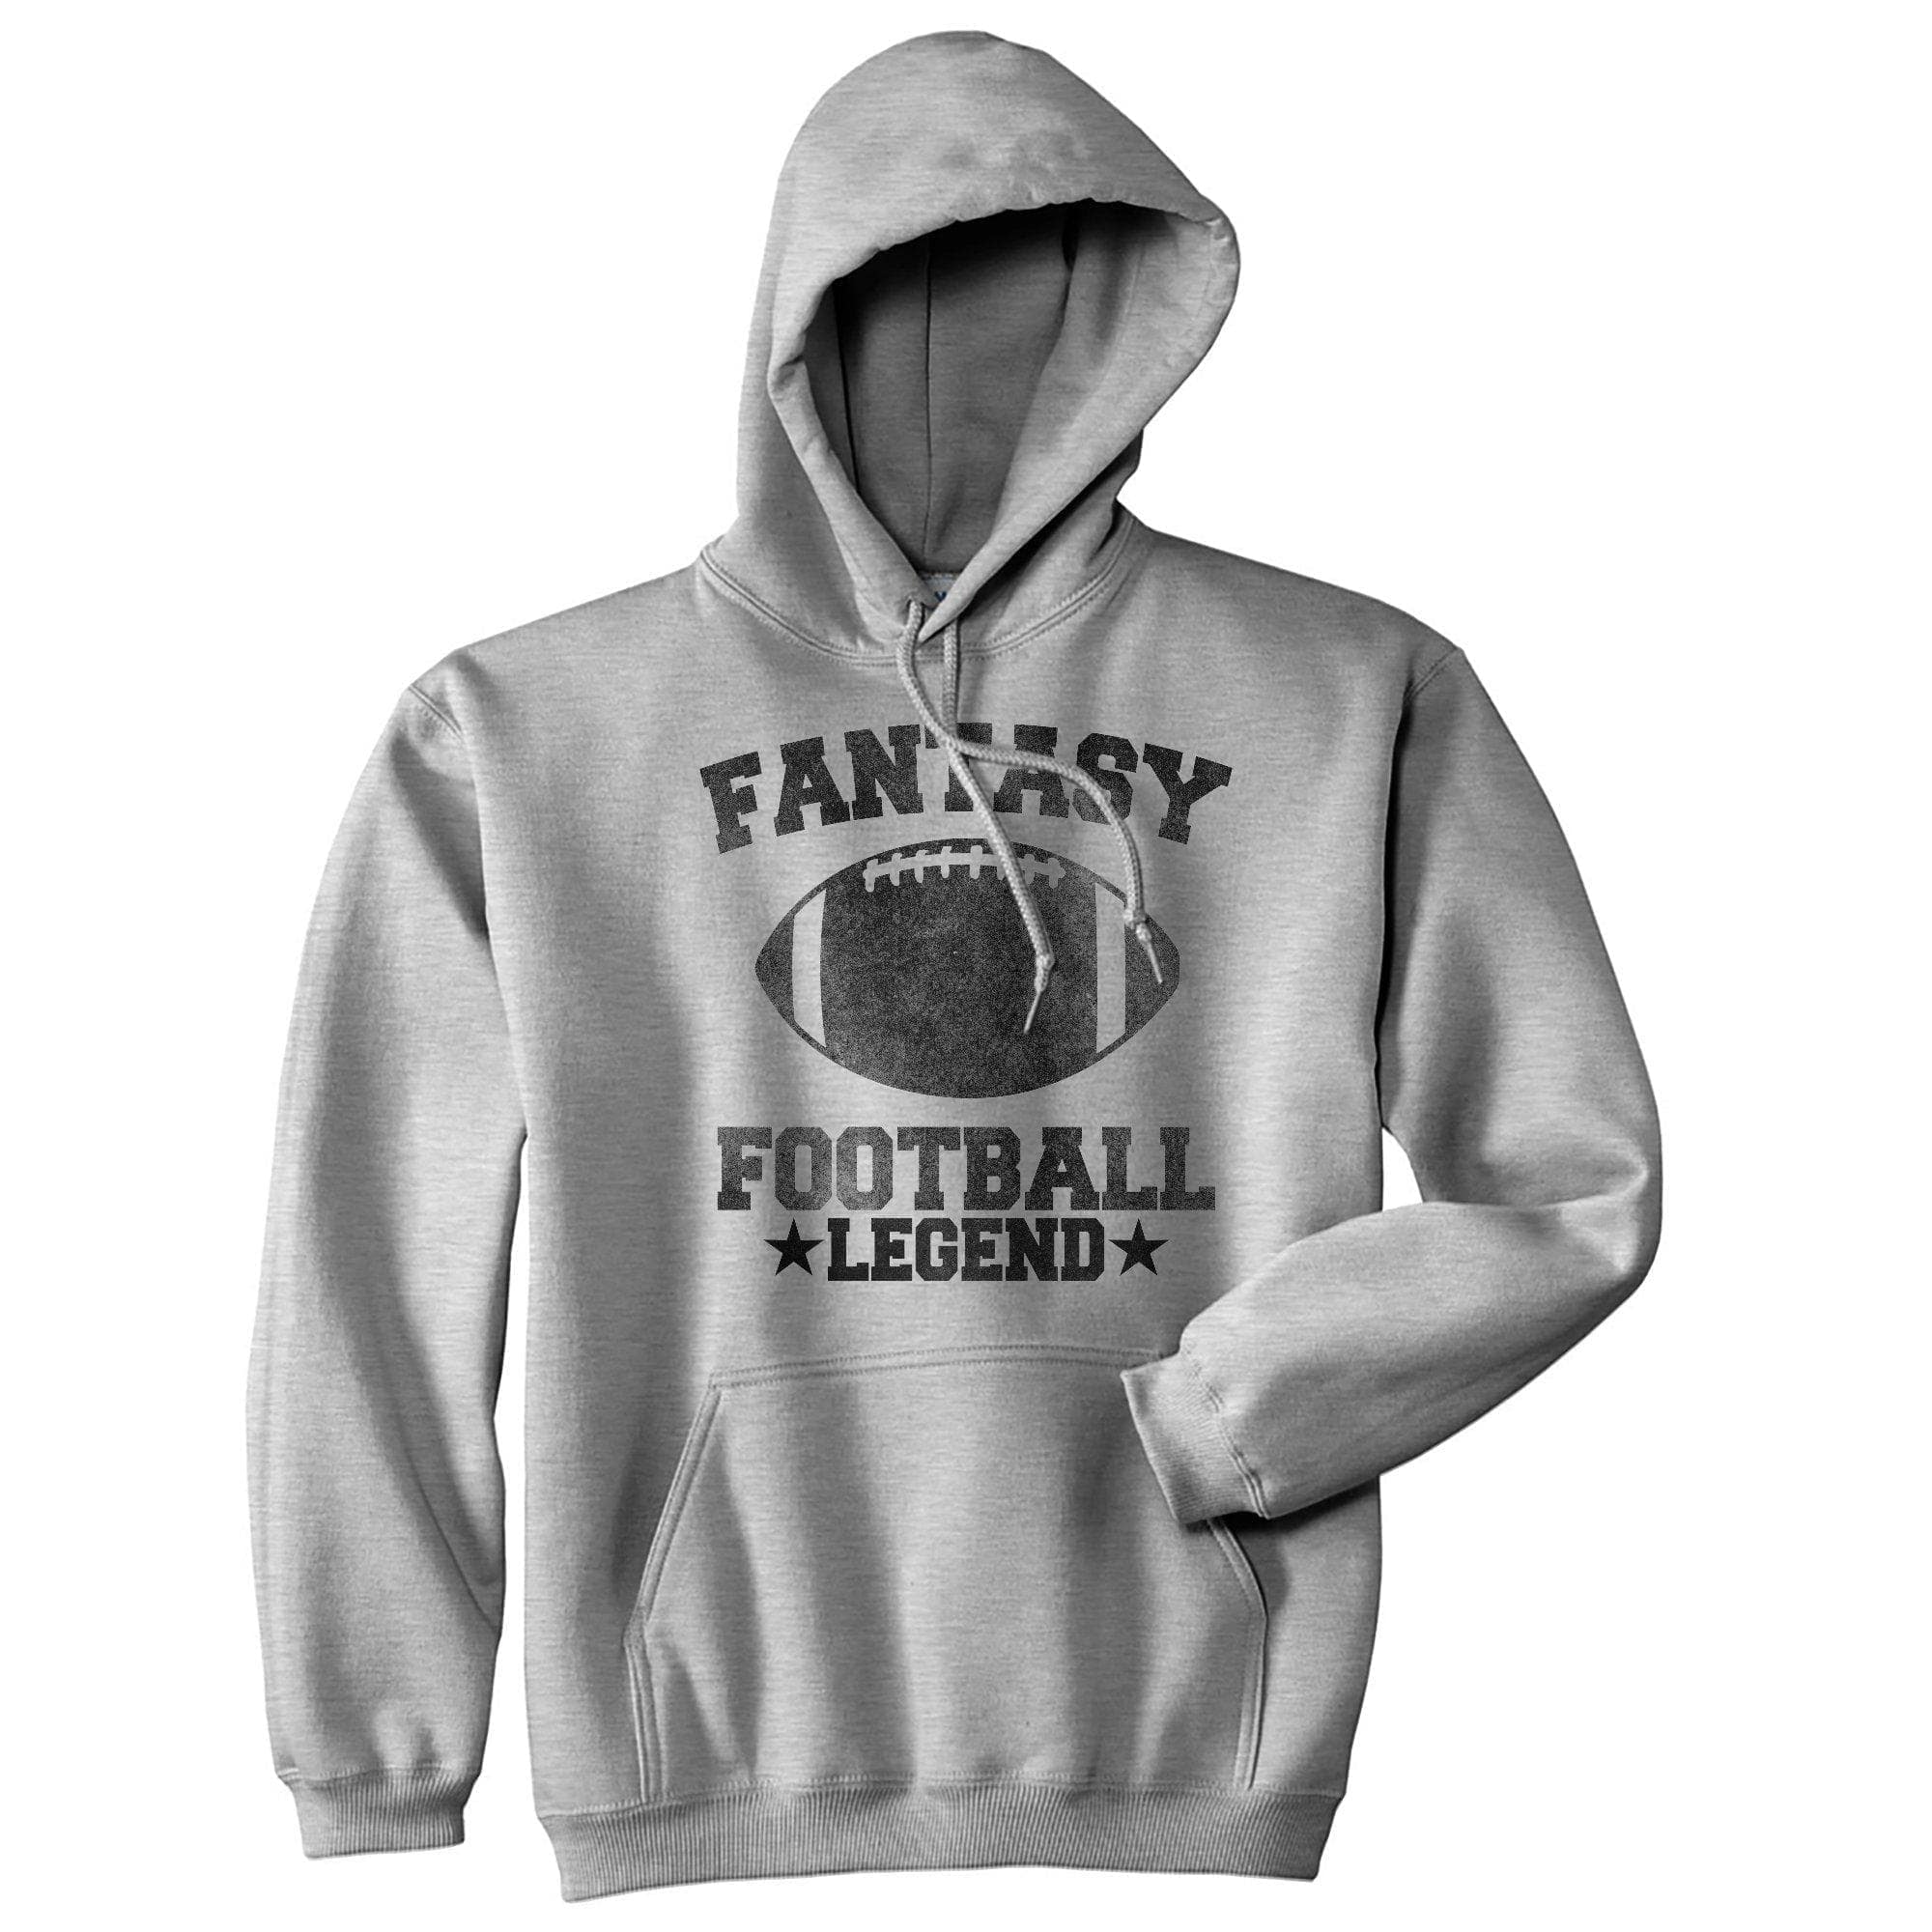 Fantasy Football Legend Hoodie - Crazy Dog T-Shirts